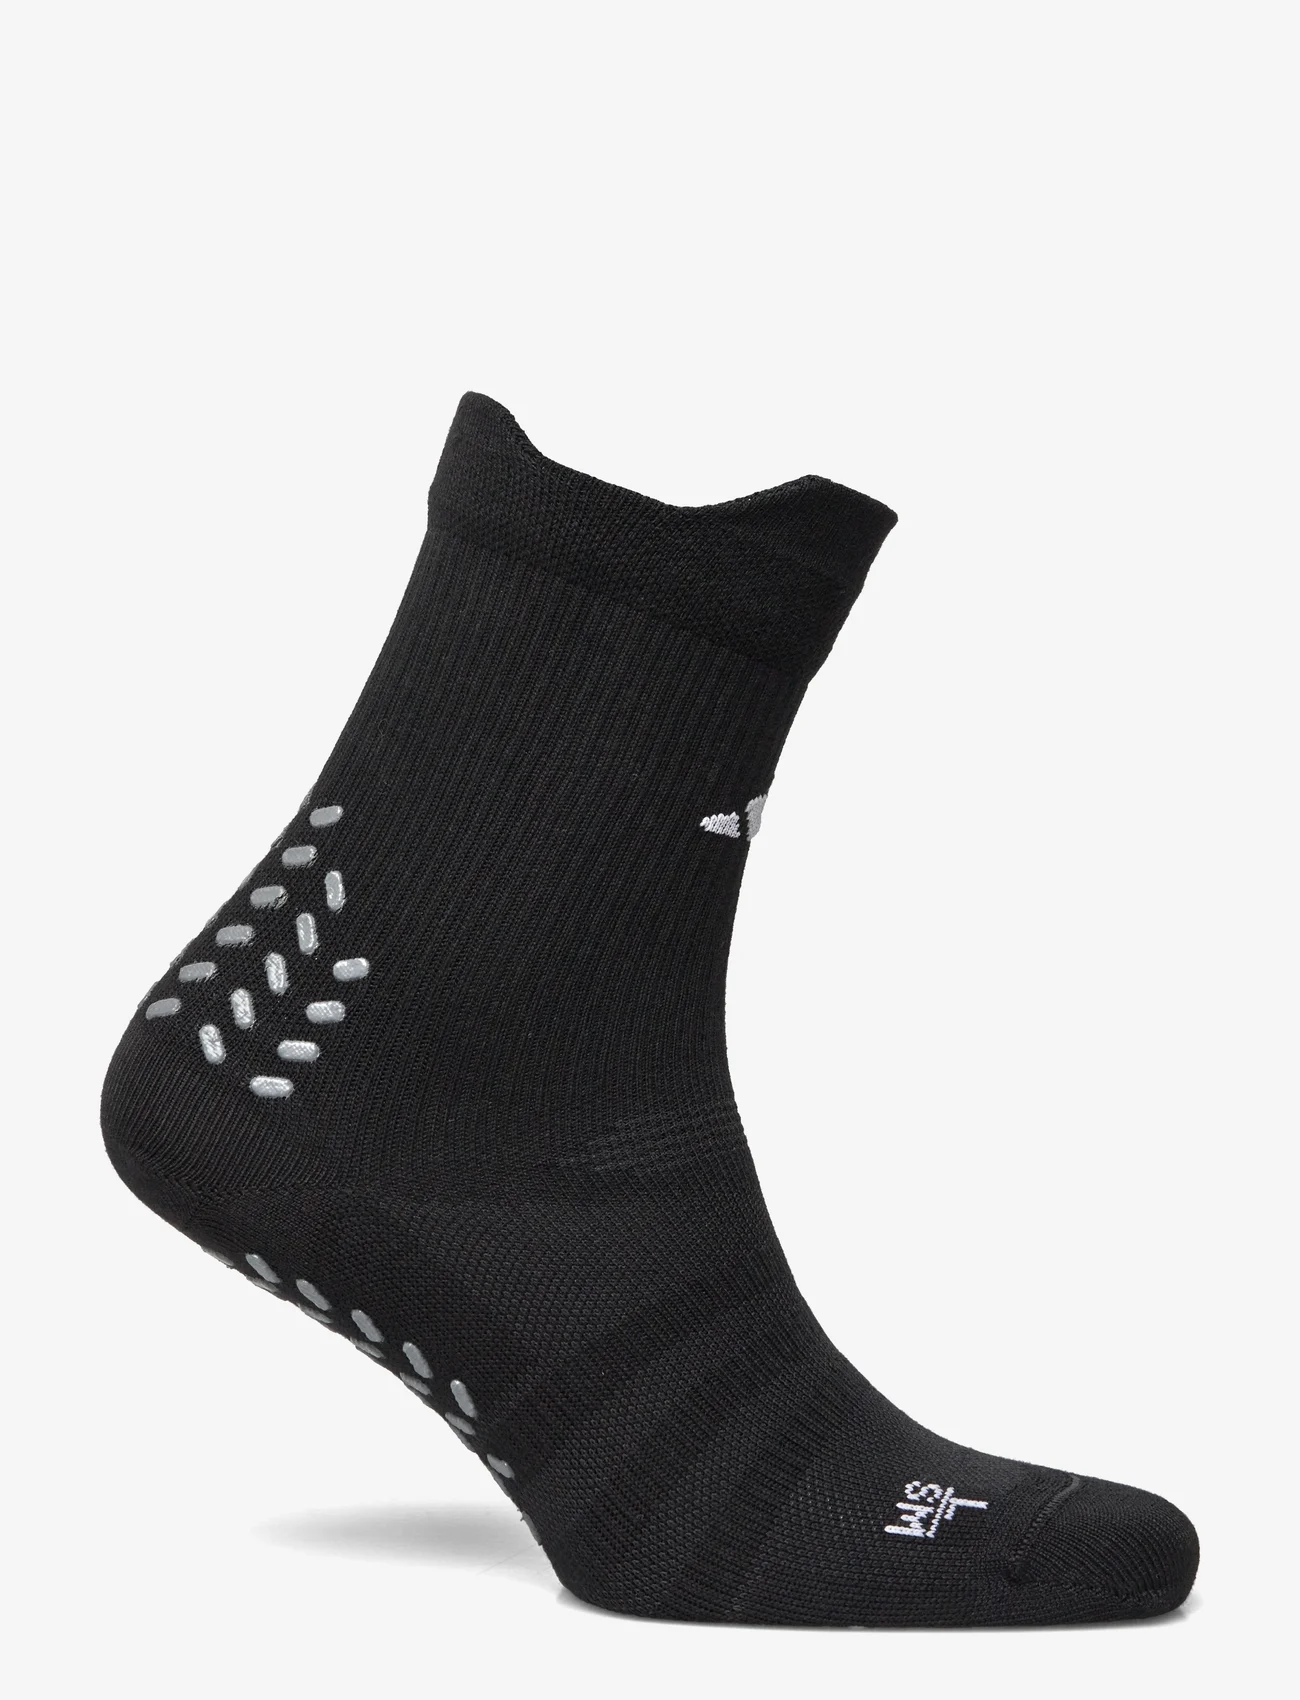 adidas Performance - Adidas Football GRIP Printed Crew Performance Socks Light - lowest prices - black/white - 1